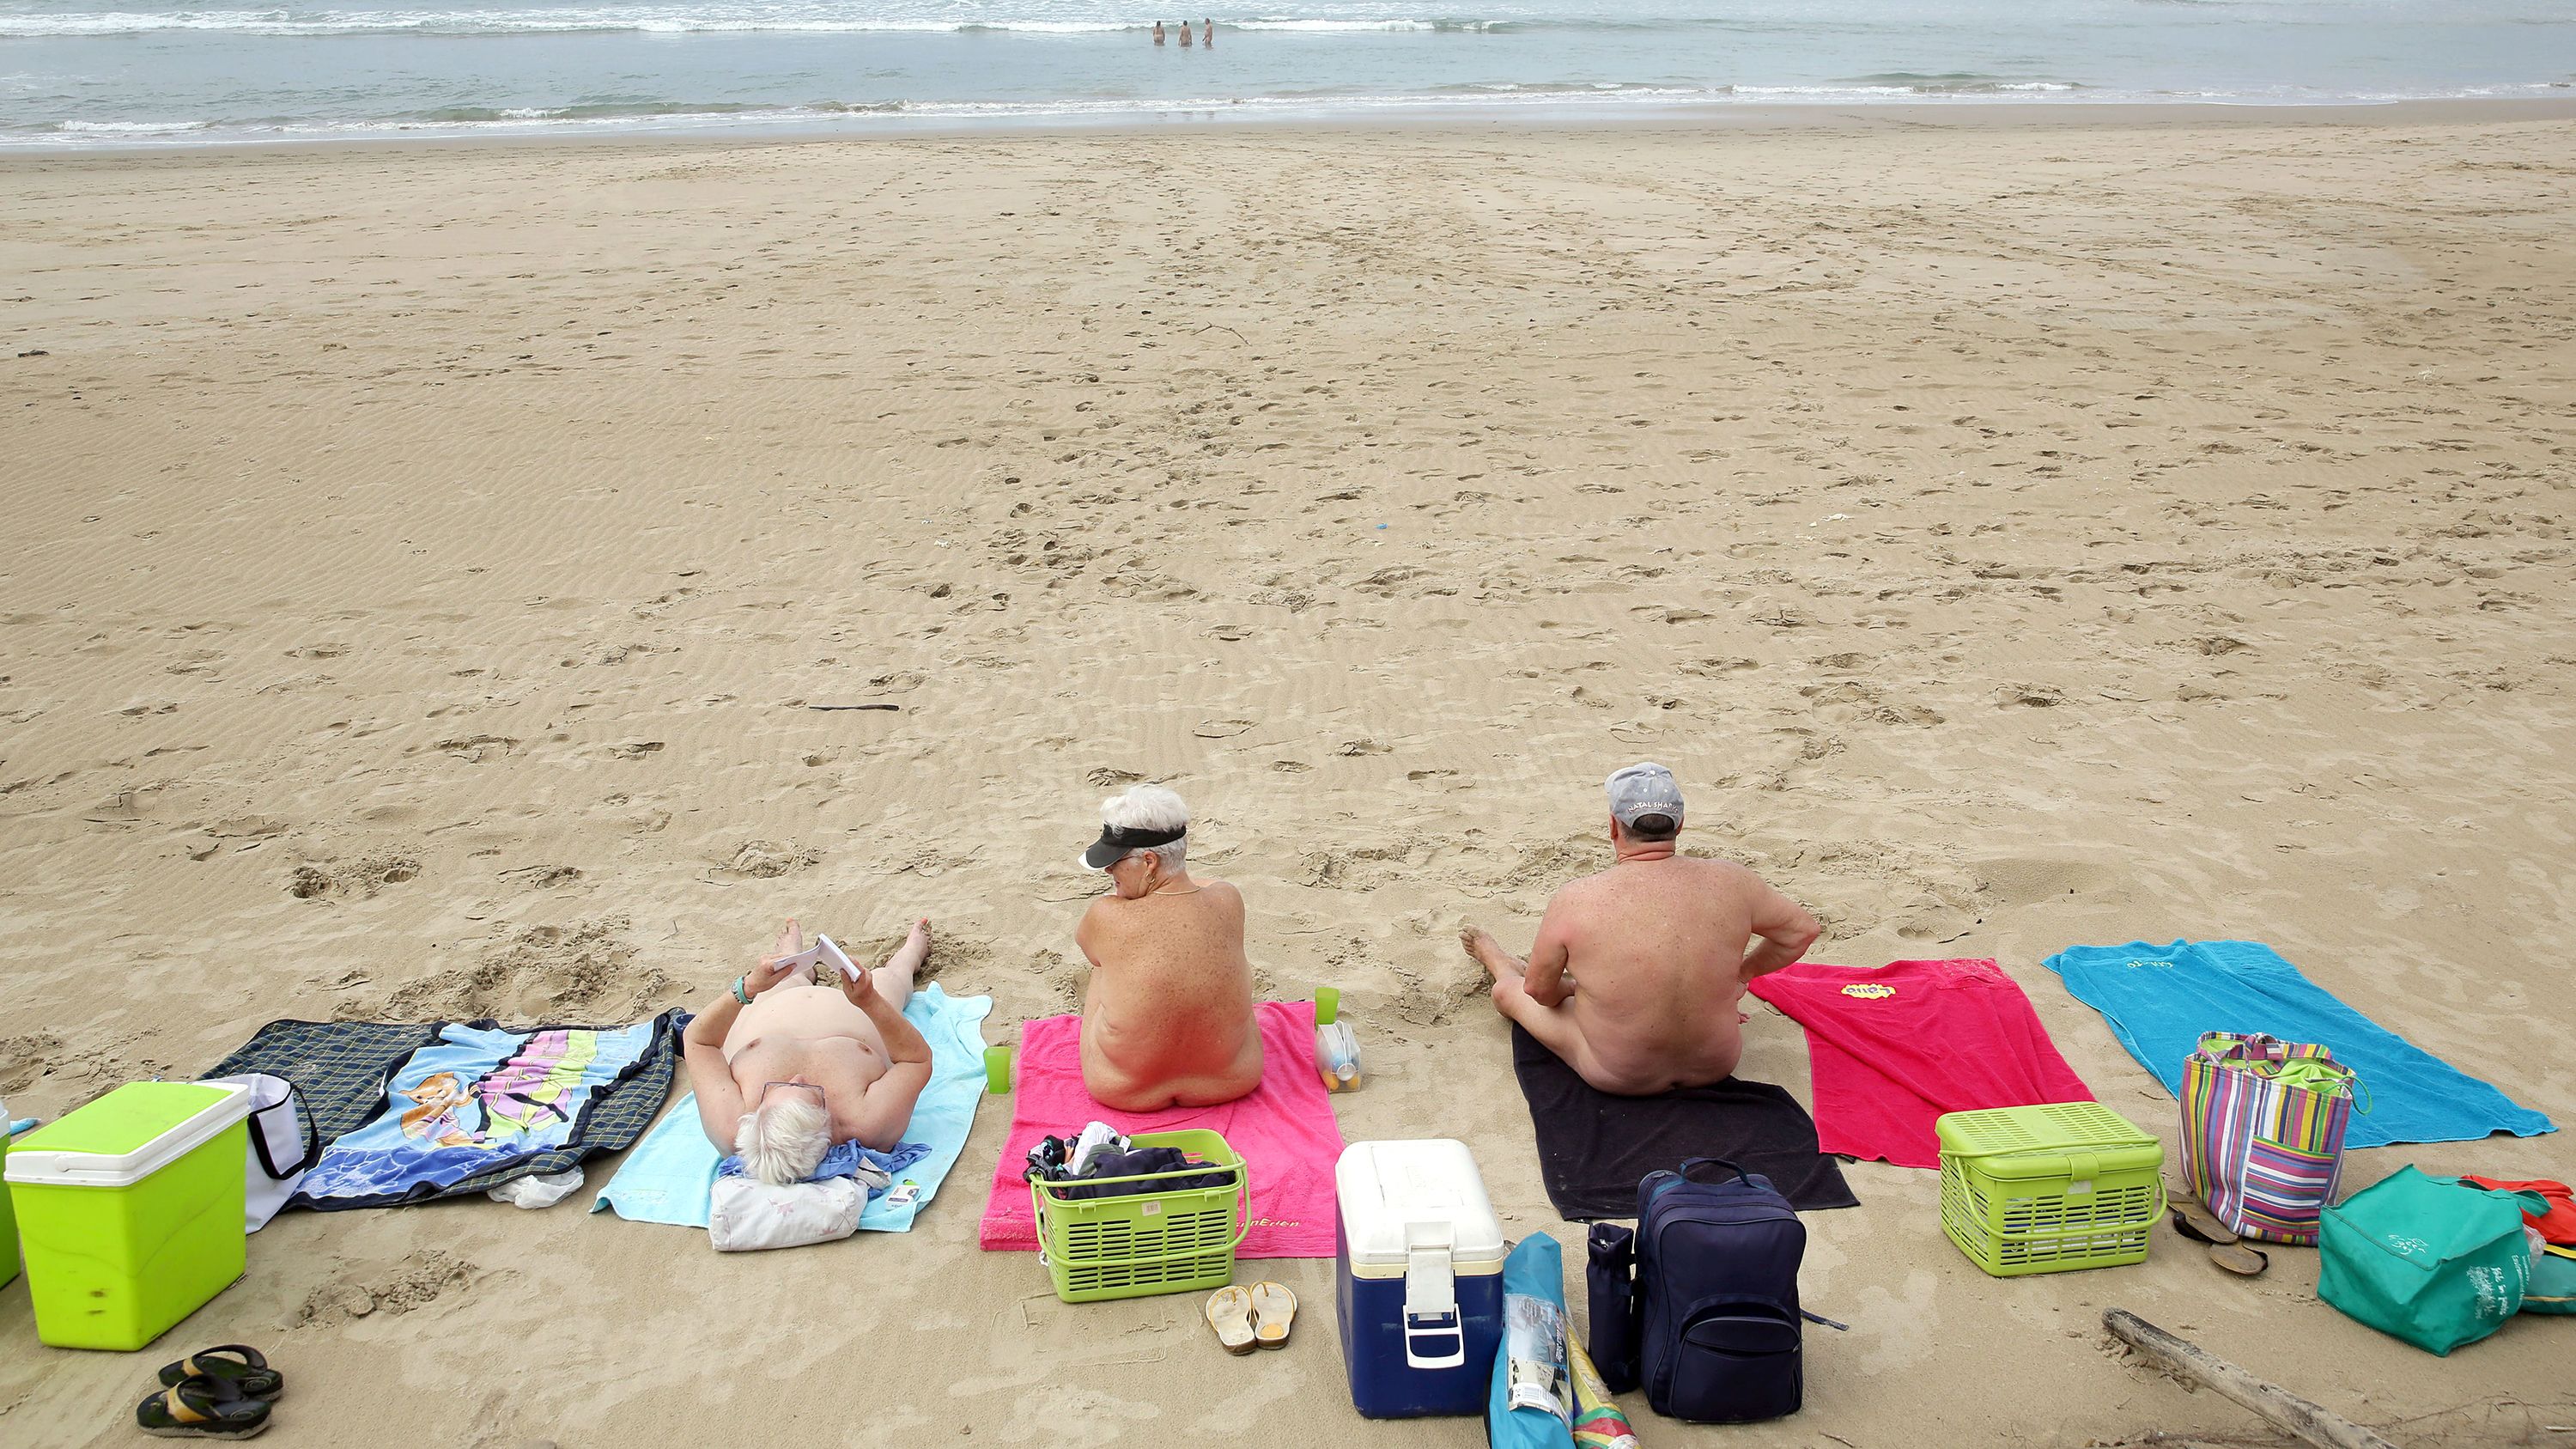 Private Beach Nude - 15 best nude beaches around the world | CNN